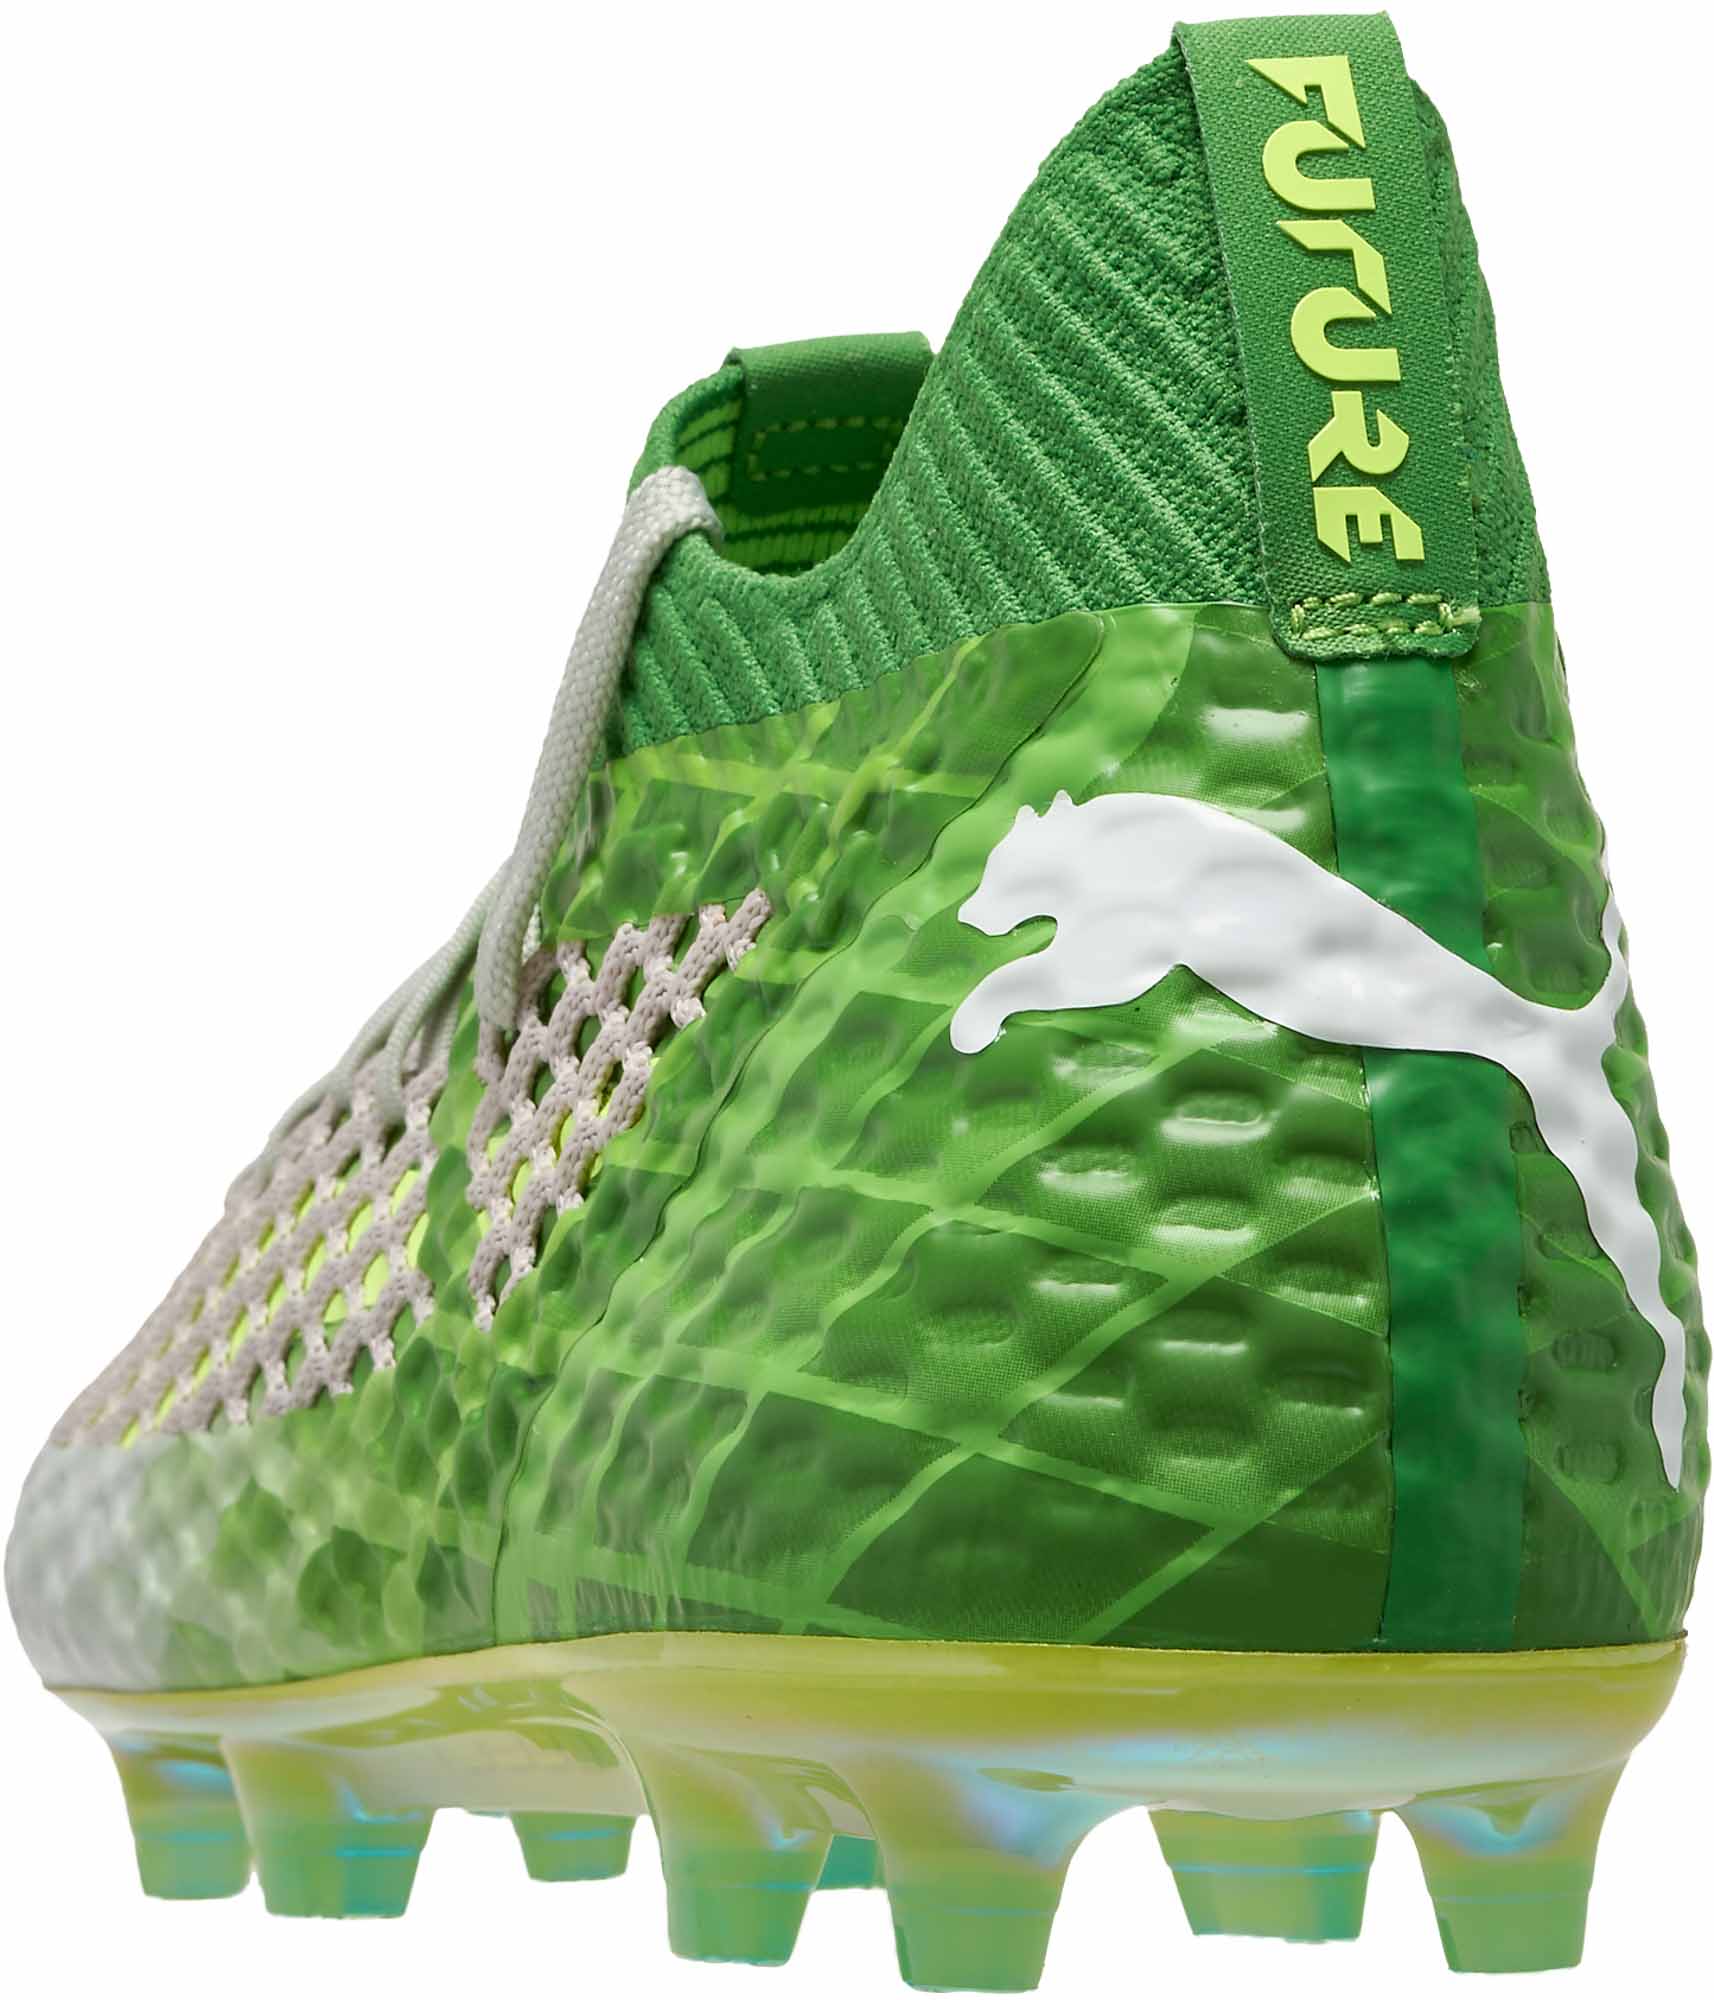 Puma Future 18.1 Netfit FG - On/Off - Green Gecko & White - Soccer Master